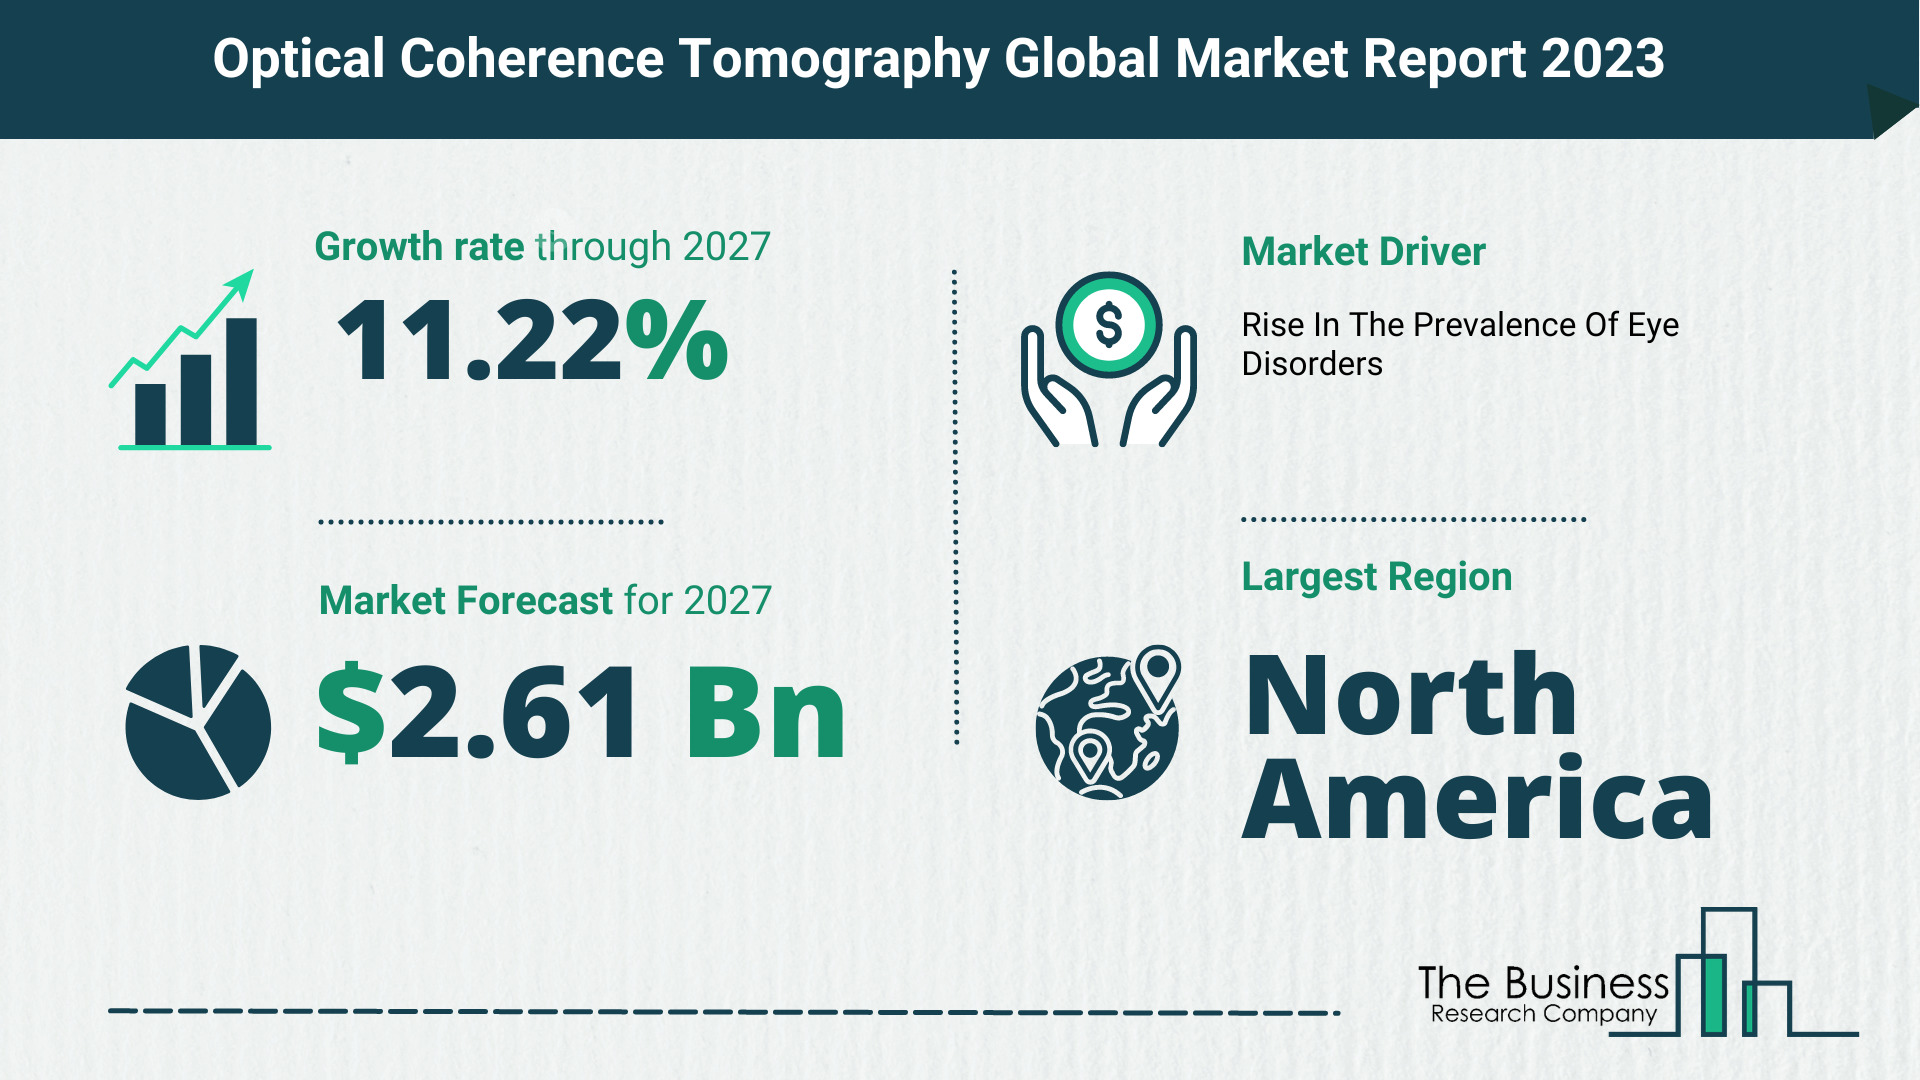 Global Optical Coherence Tomography Market